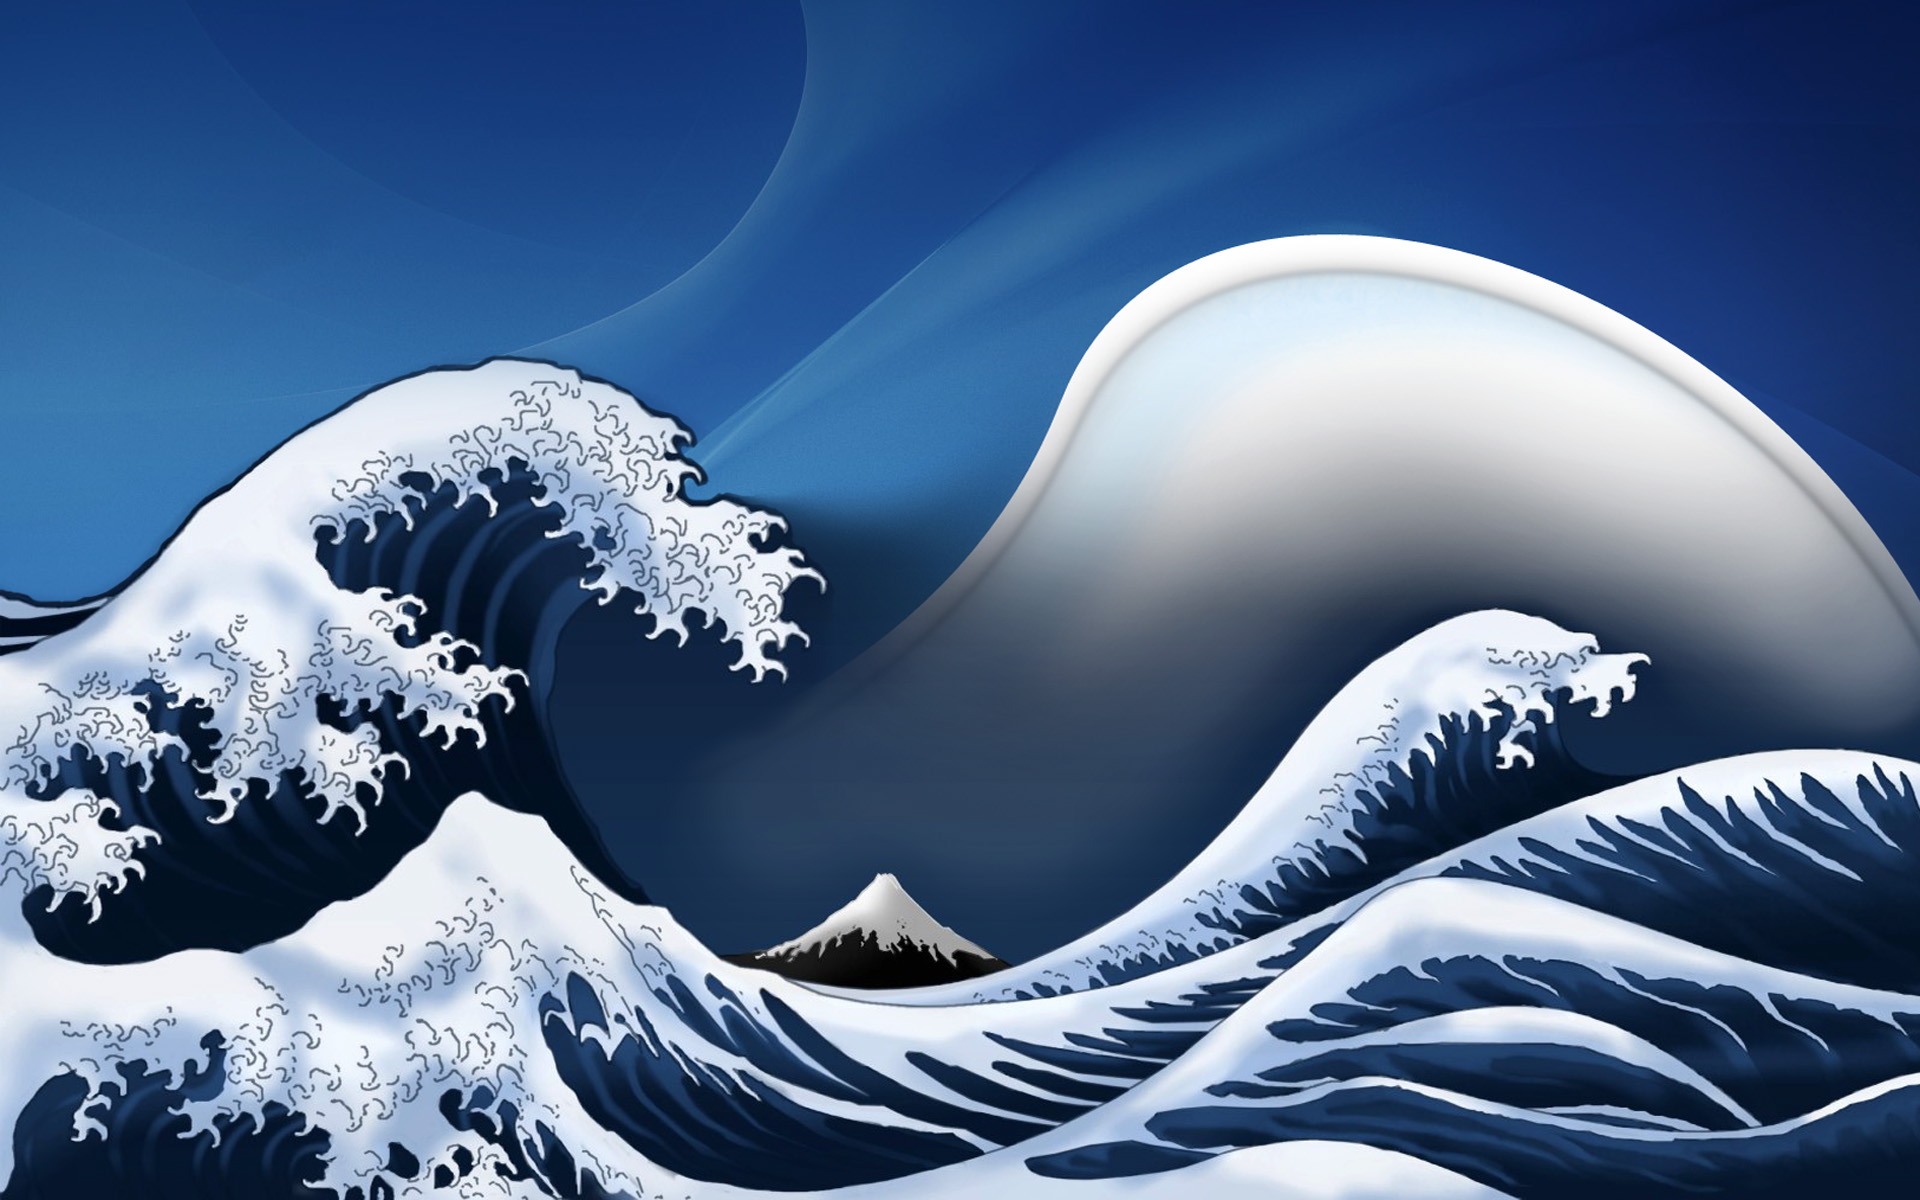 Free Download The Great Wave Off Kanagawa Artwork Digital Art Waves Wallpaper Hq 19x10 For Your Desktop Mobile Tablet Explore 63 The Great Wave Off Kanagawa Wallpaper Japanese Wave